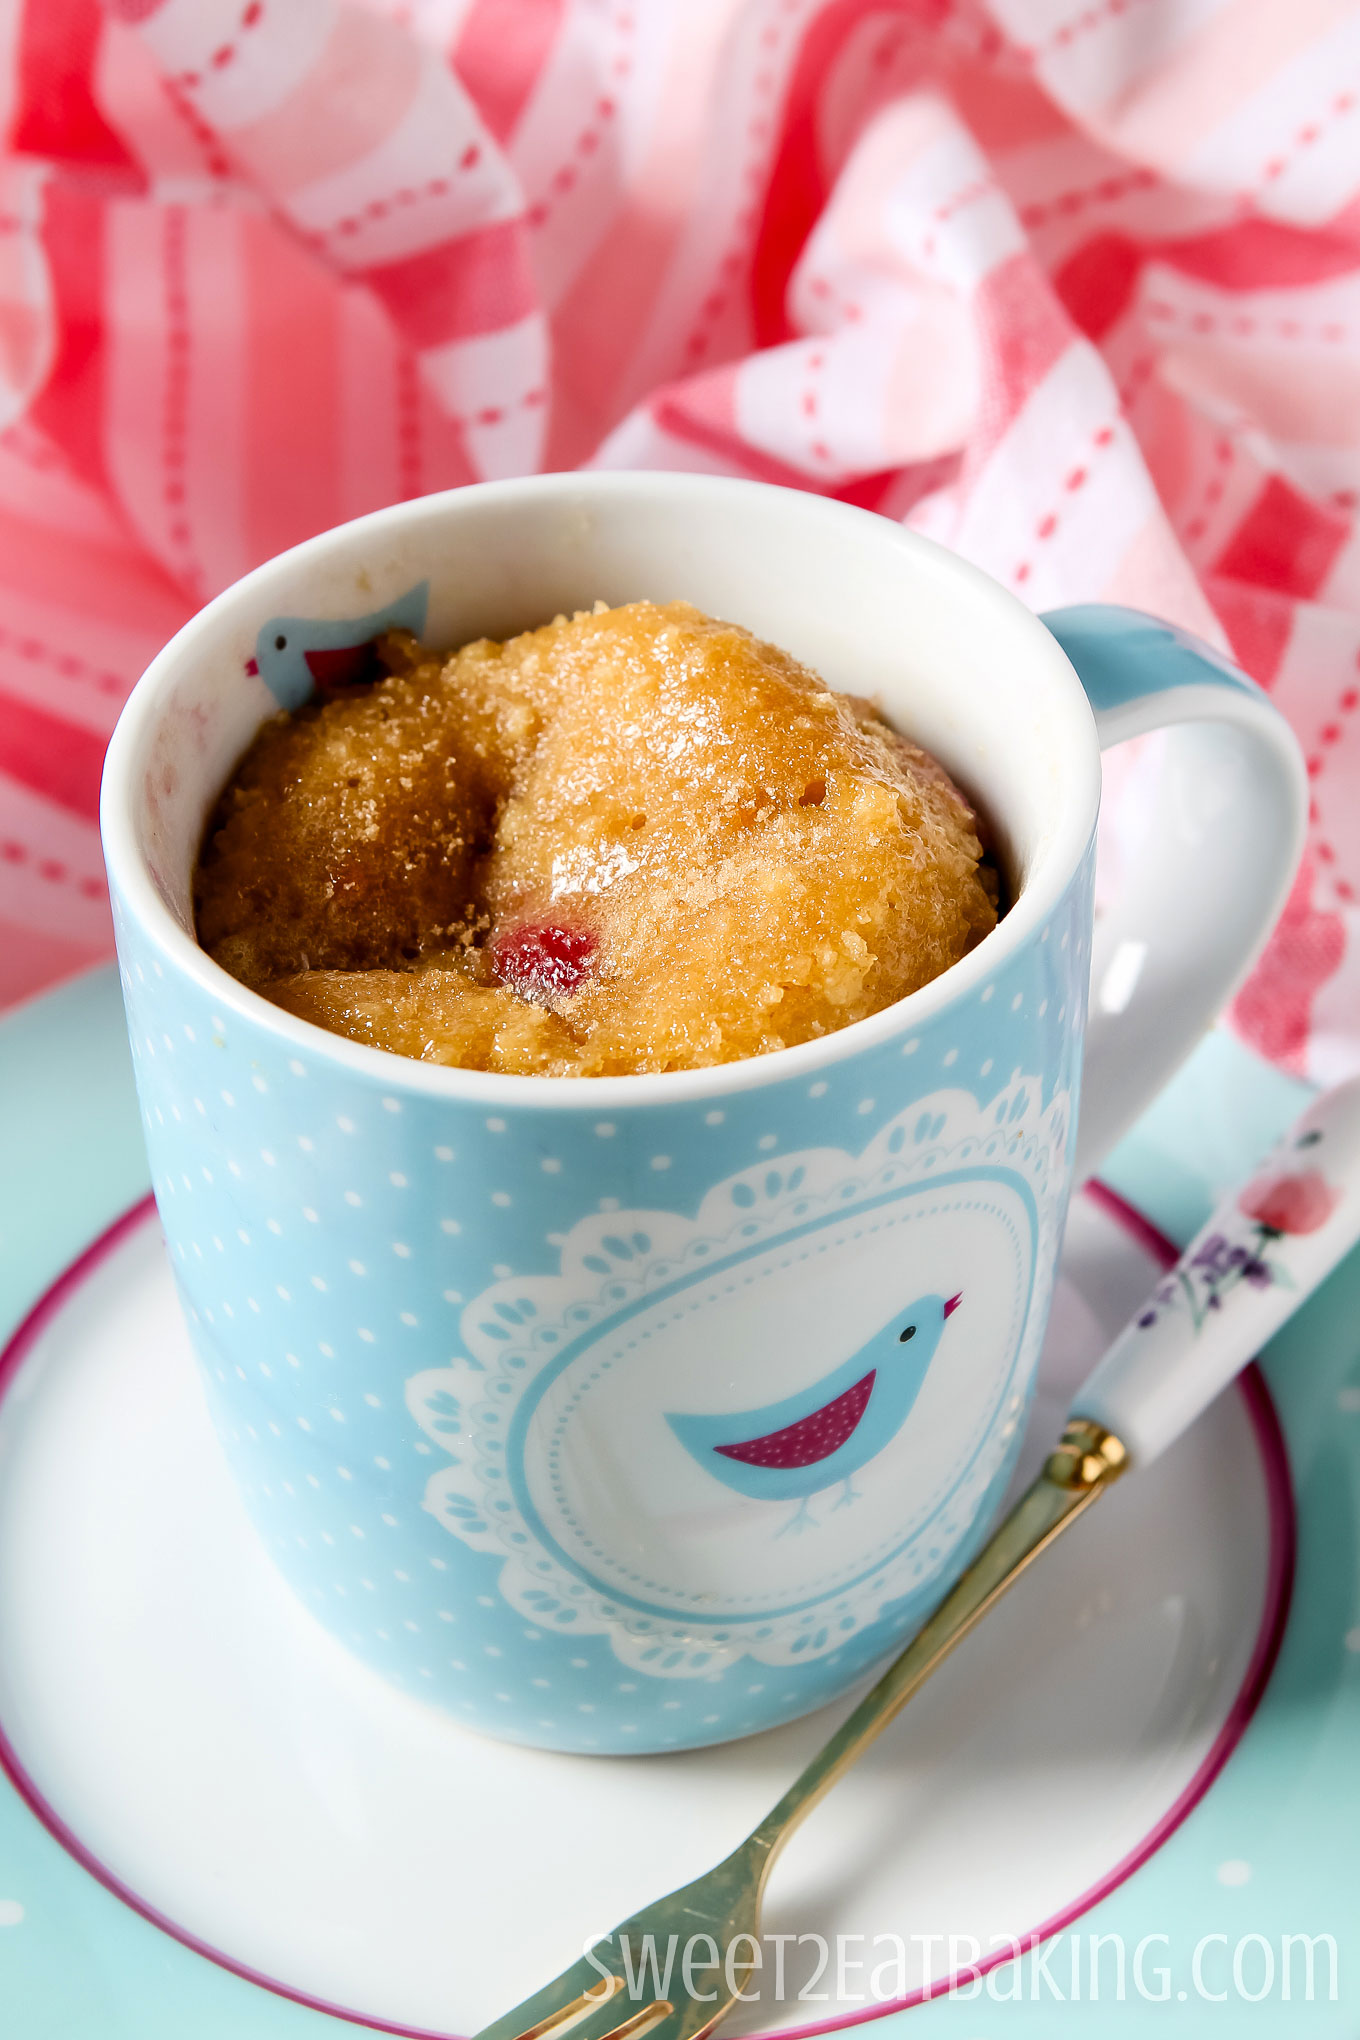 Raspberry & White Chocolate Mug Muffin Recipe by Sweet2EatBaking.com